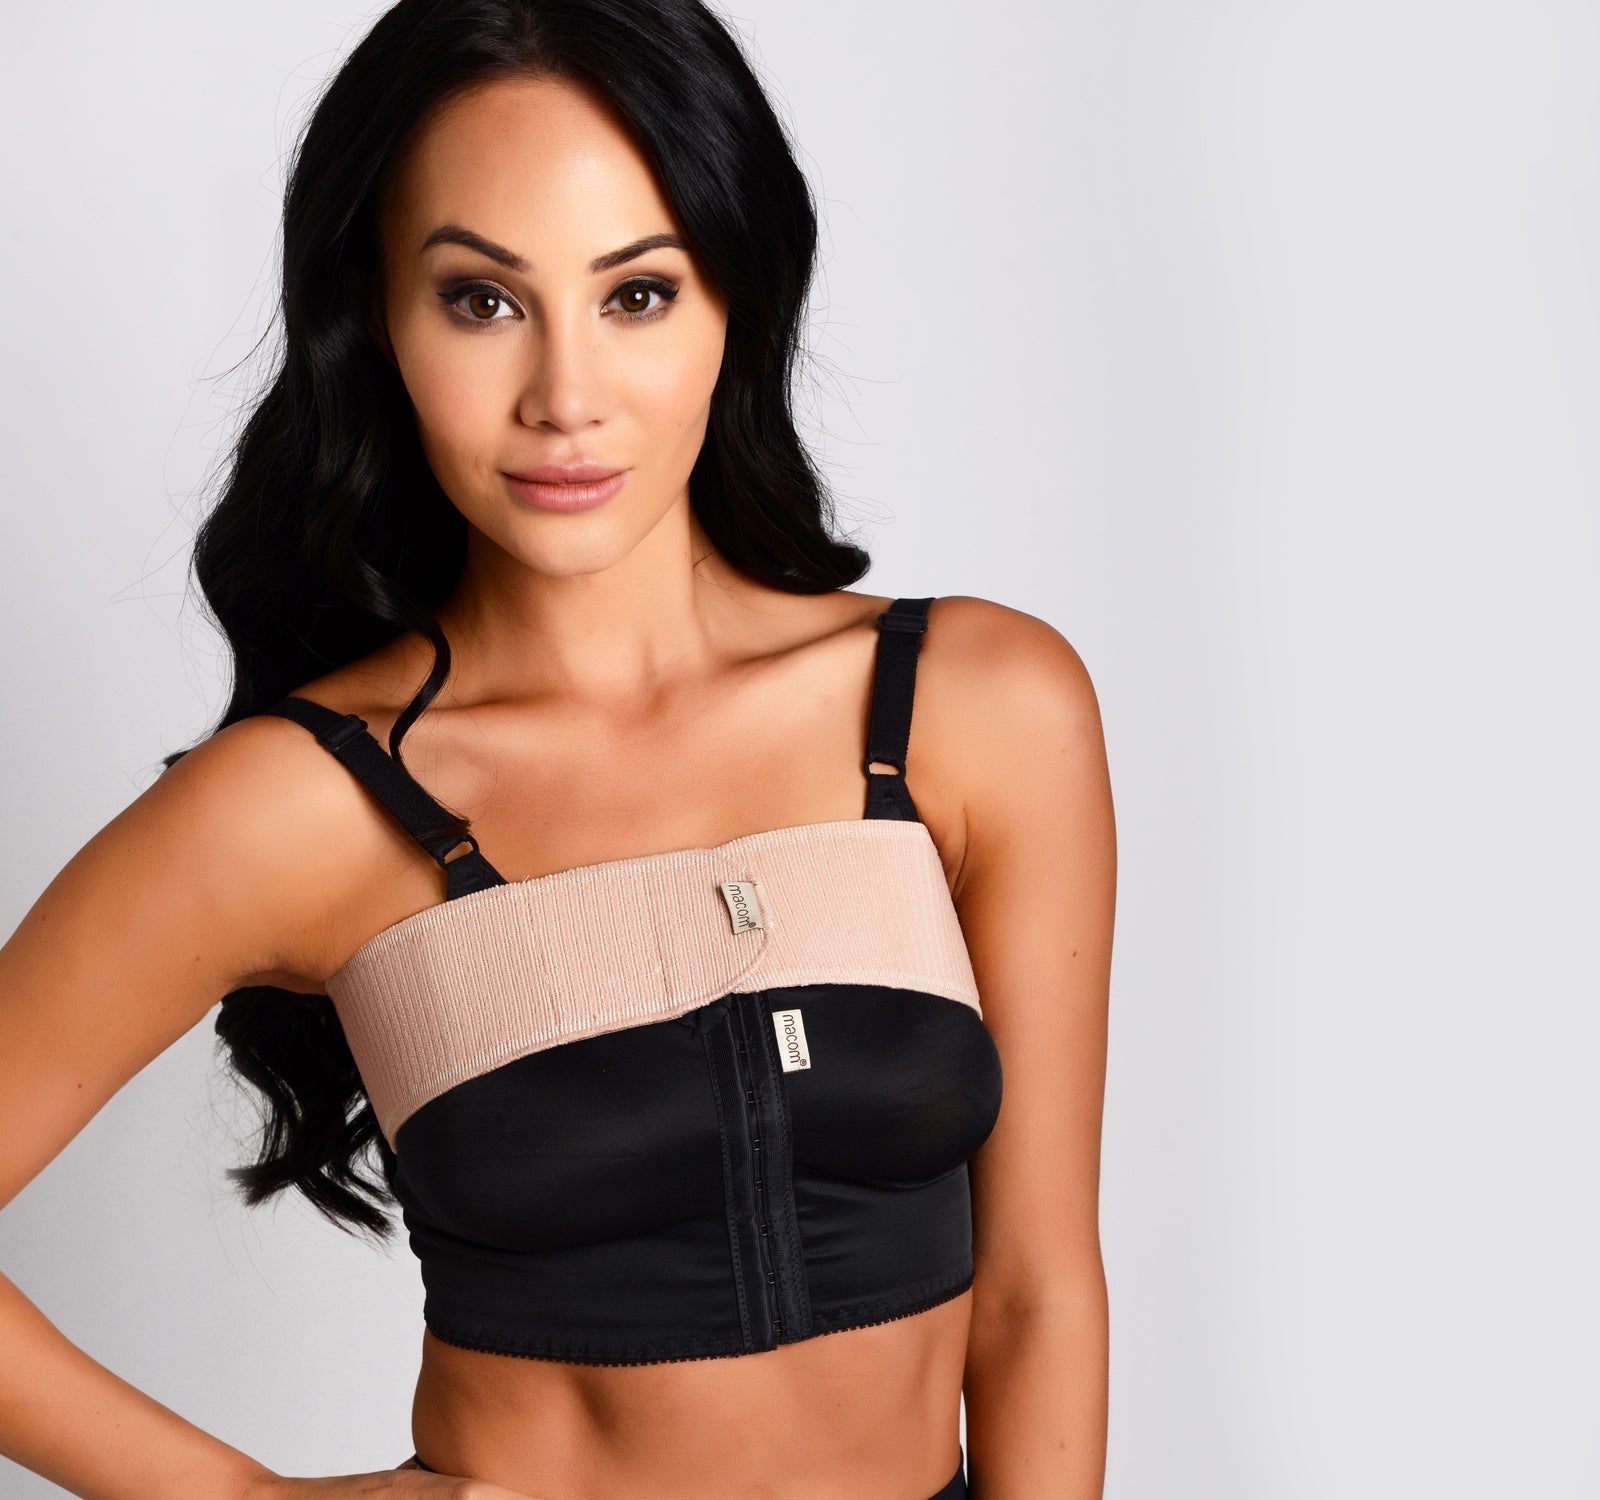 1010 Post-Surgery Breast Band Fajas Meli'belt – The Pink Room Shapewear